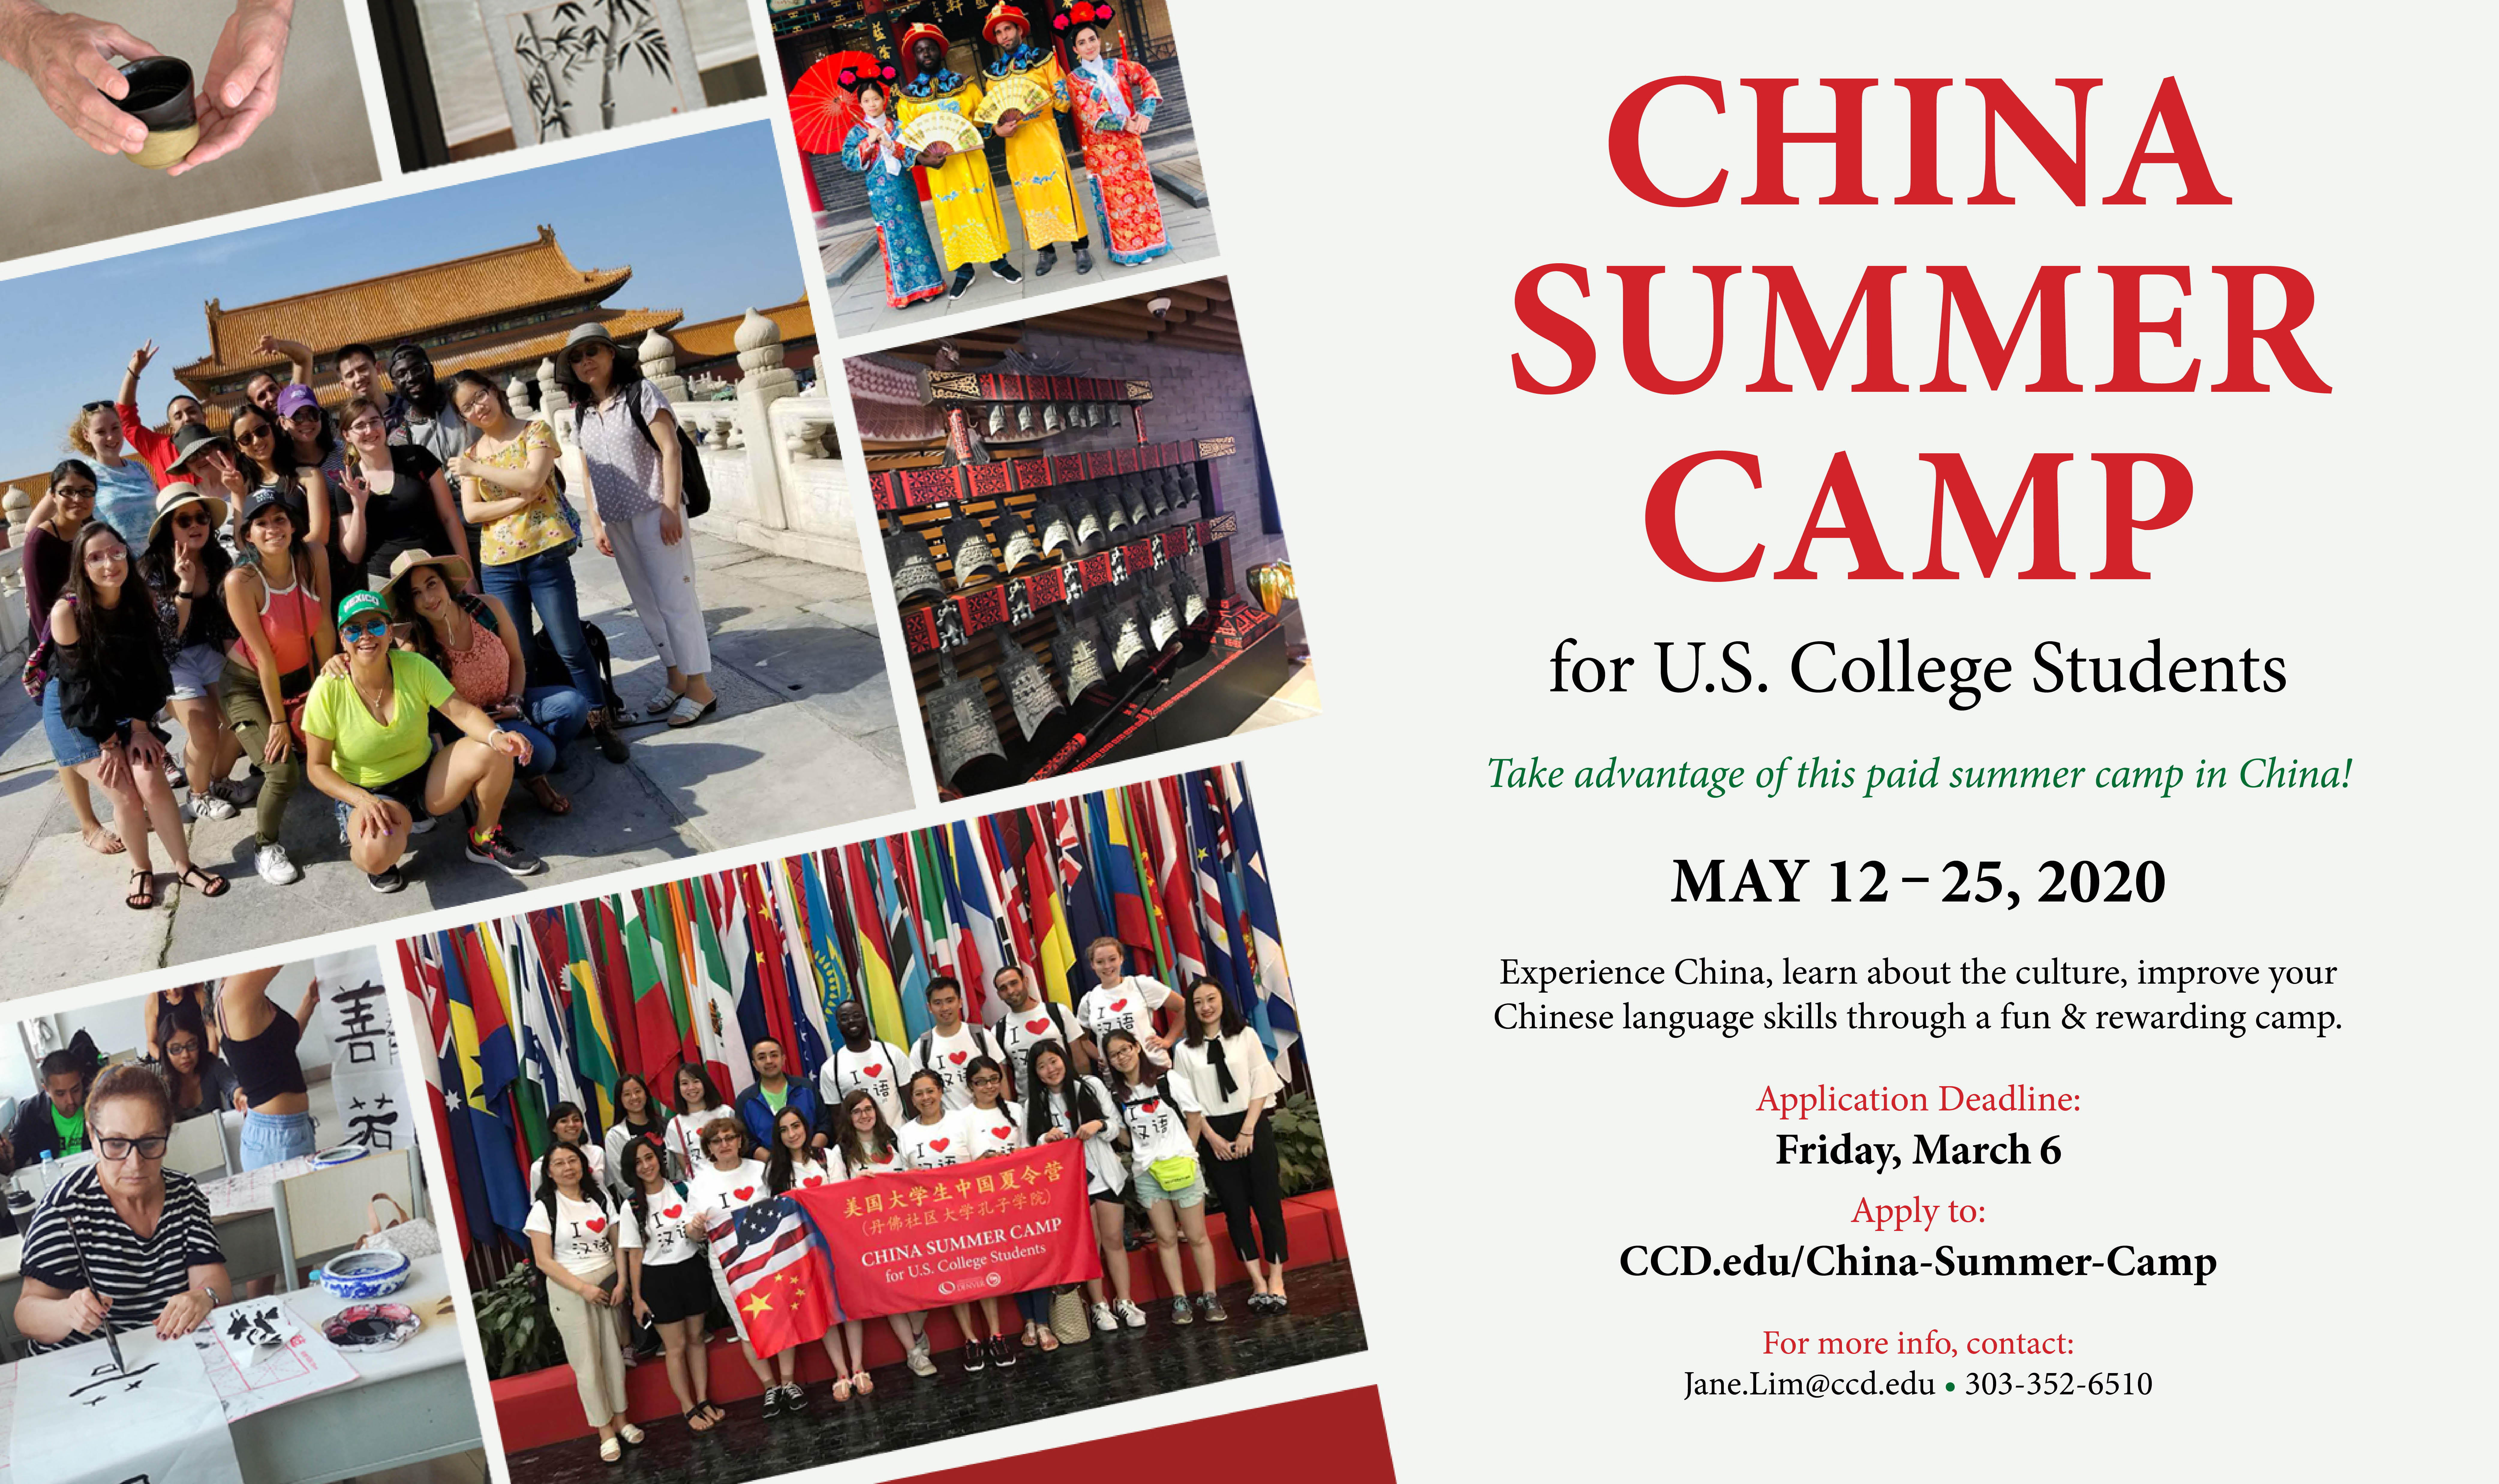 chinasummercamp2020newprogram.jpg Community College of Denver